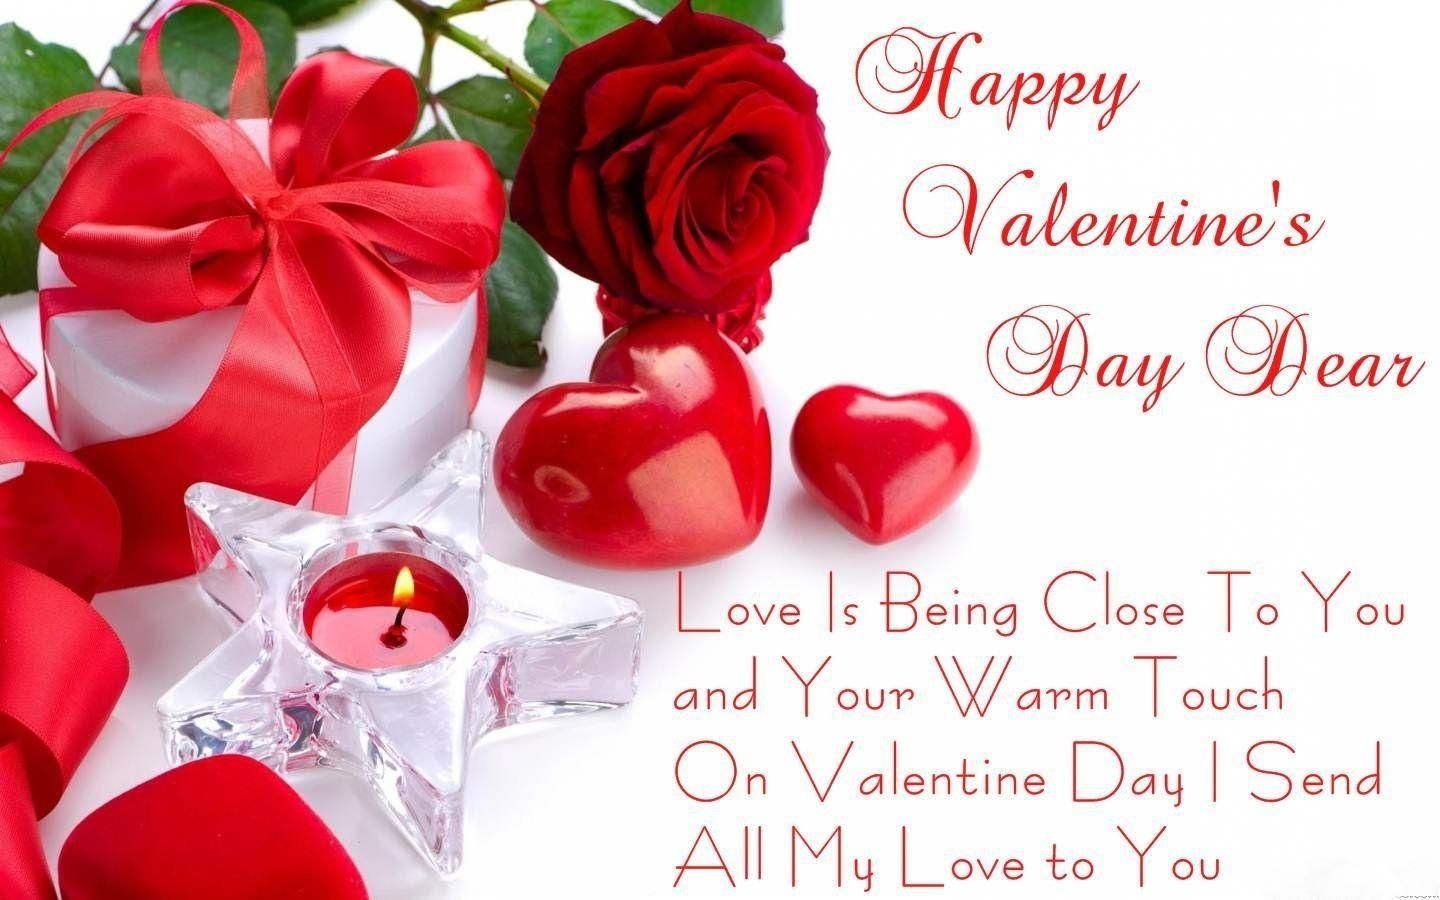 Valentine Day Messages. Happy valentines day wishes, Happy valentine day quotes, Happy valentines day image